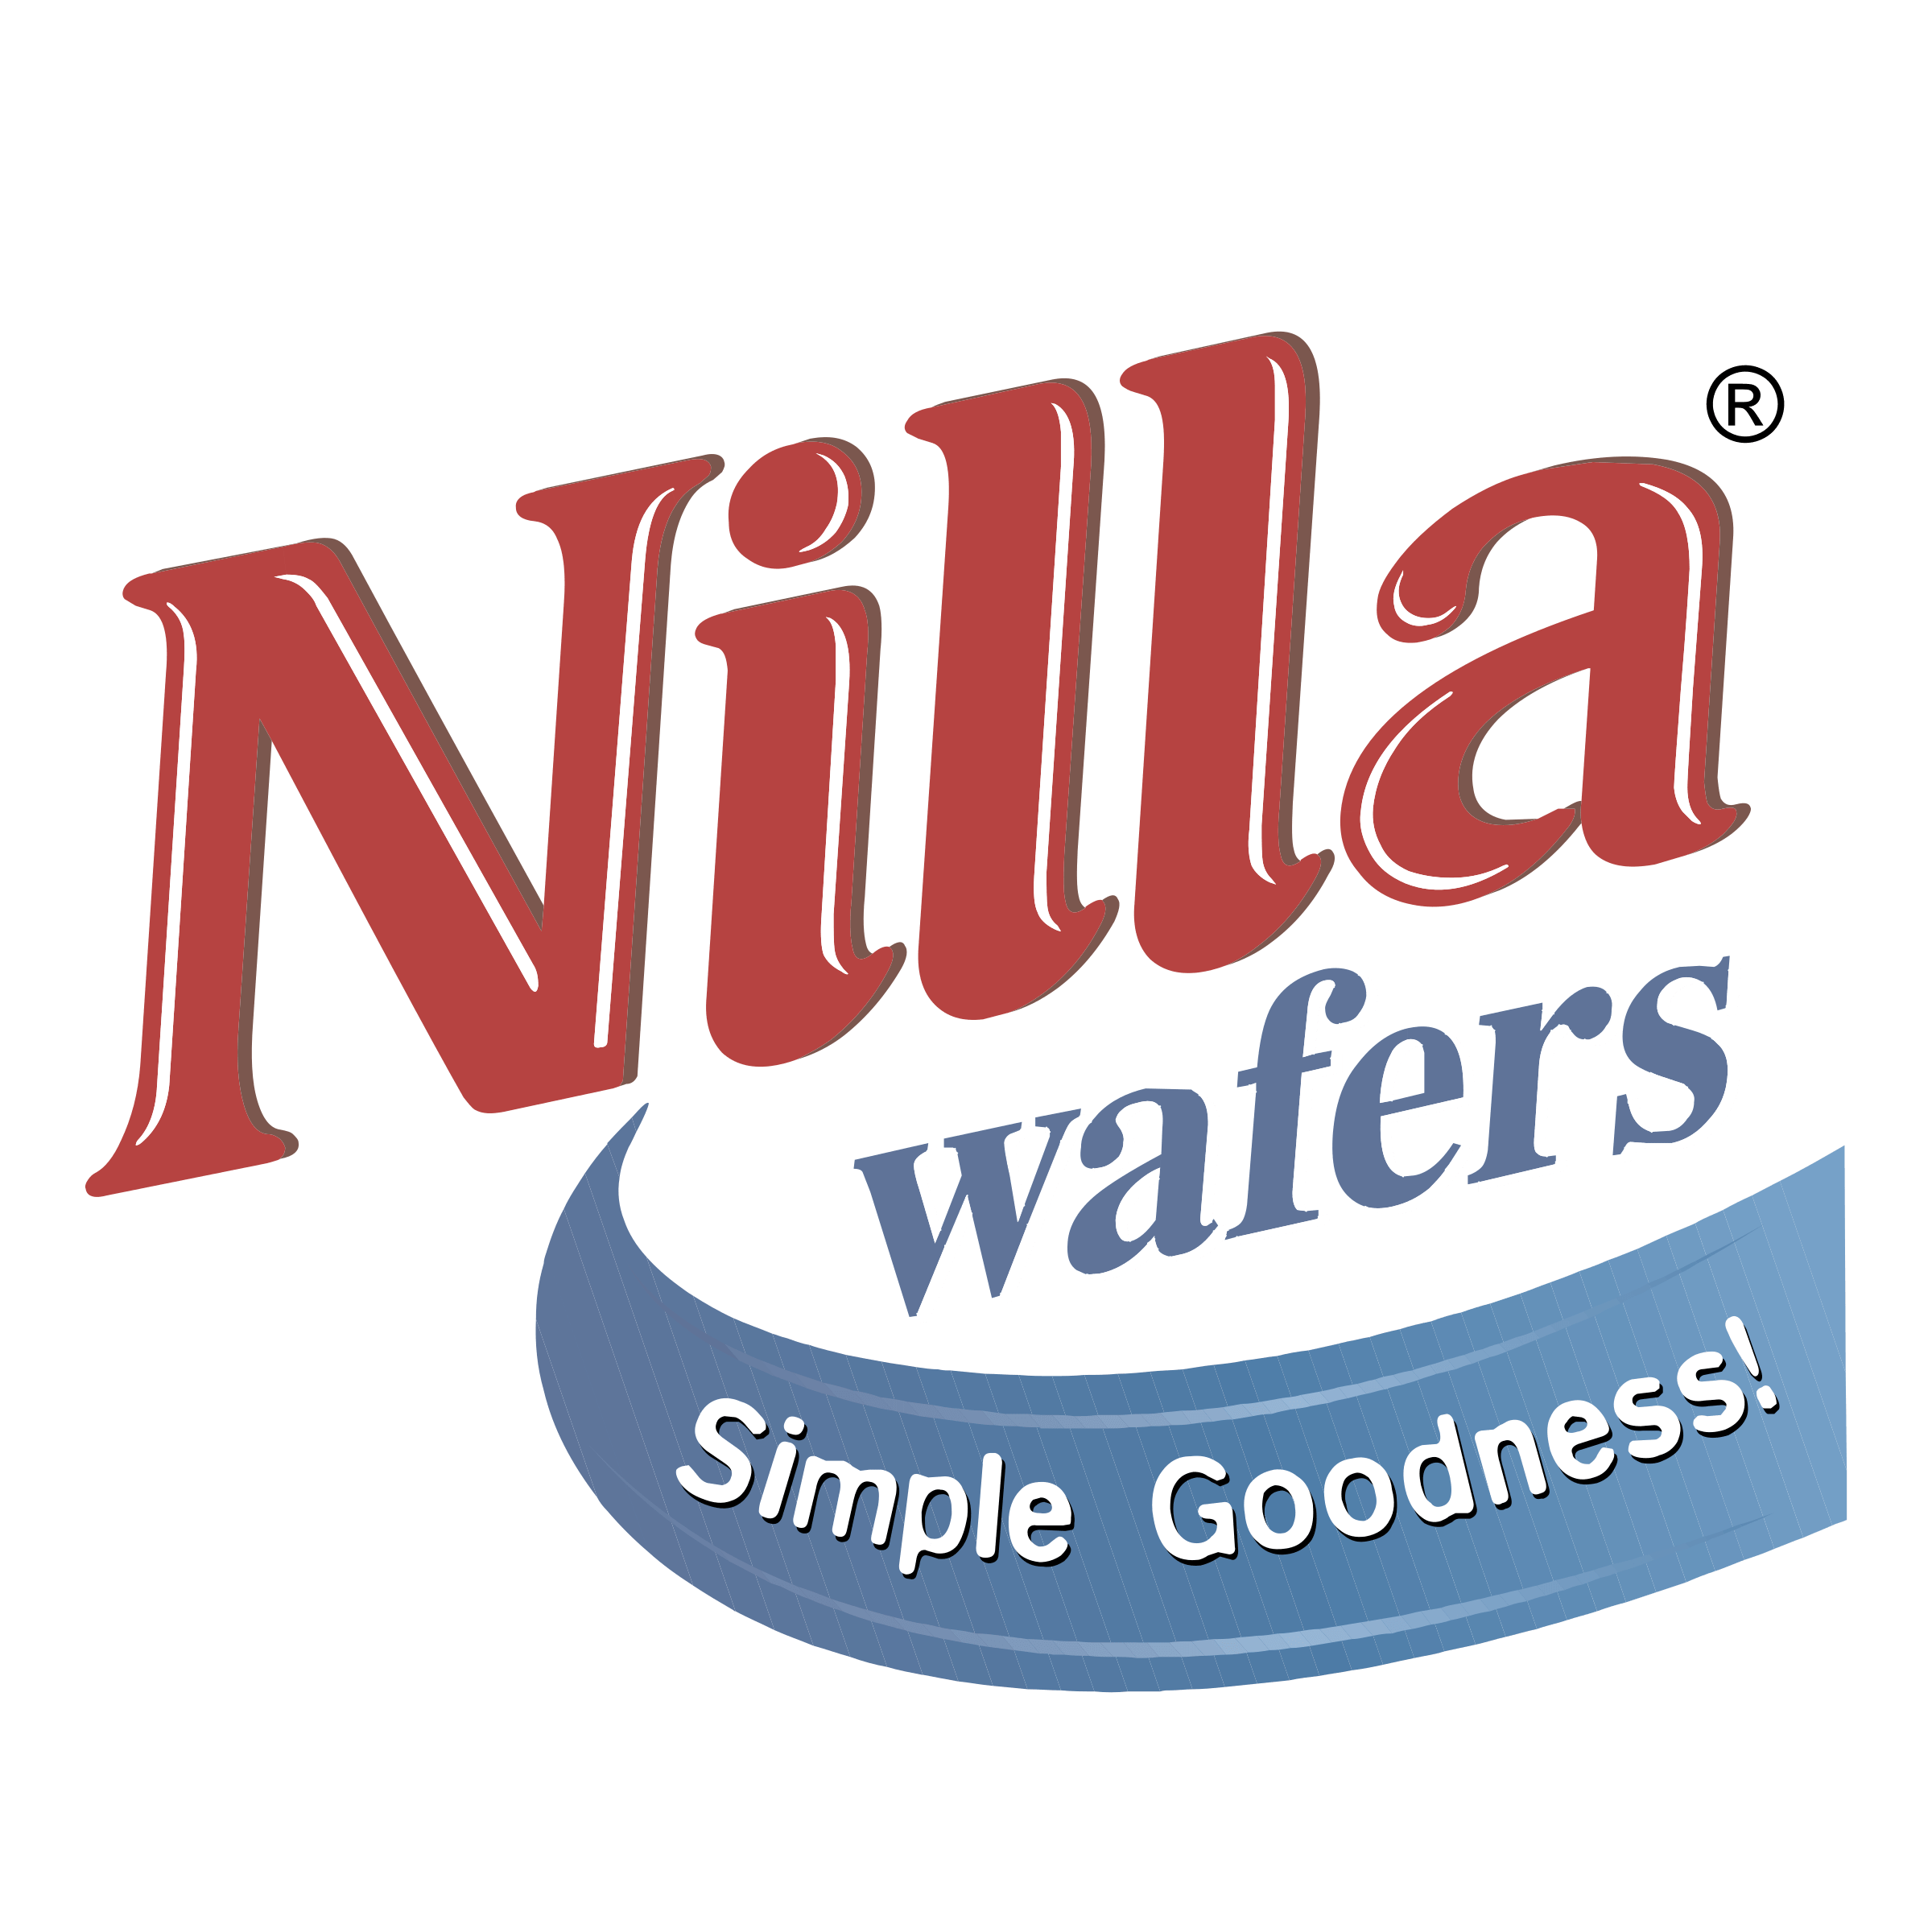 Nilla Logo - Nilla Wafers Logo PNG Transparent & SVG Vector - Freebie Supply